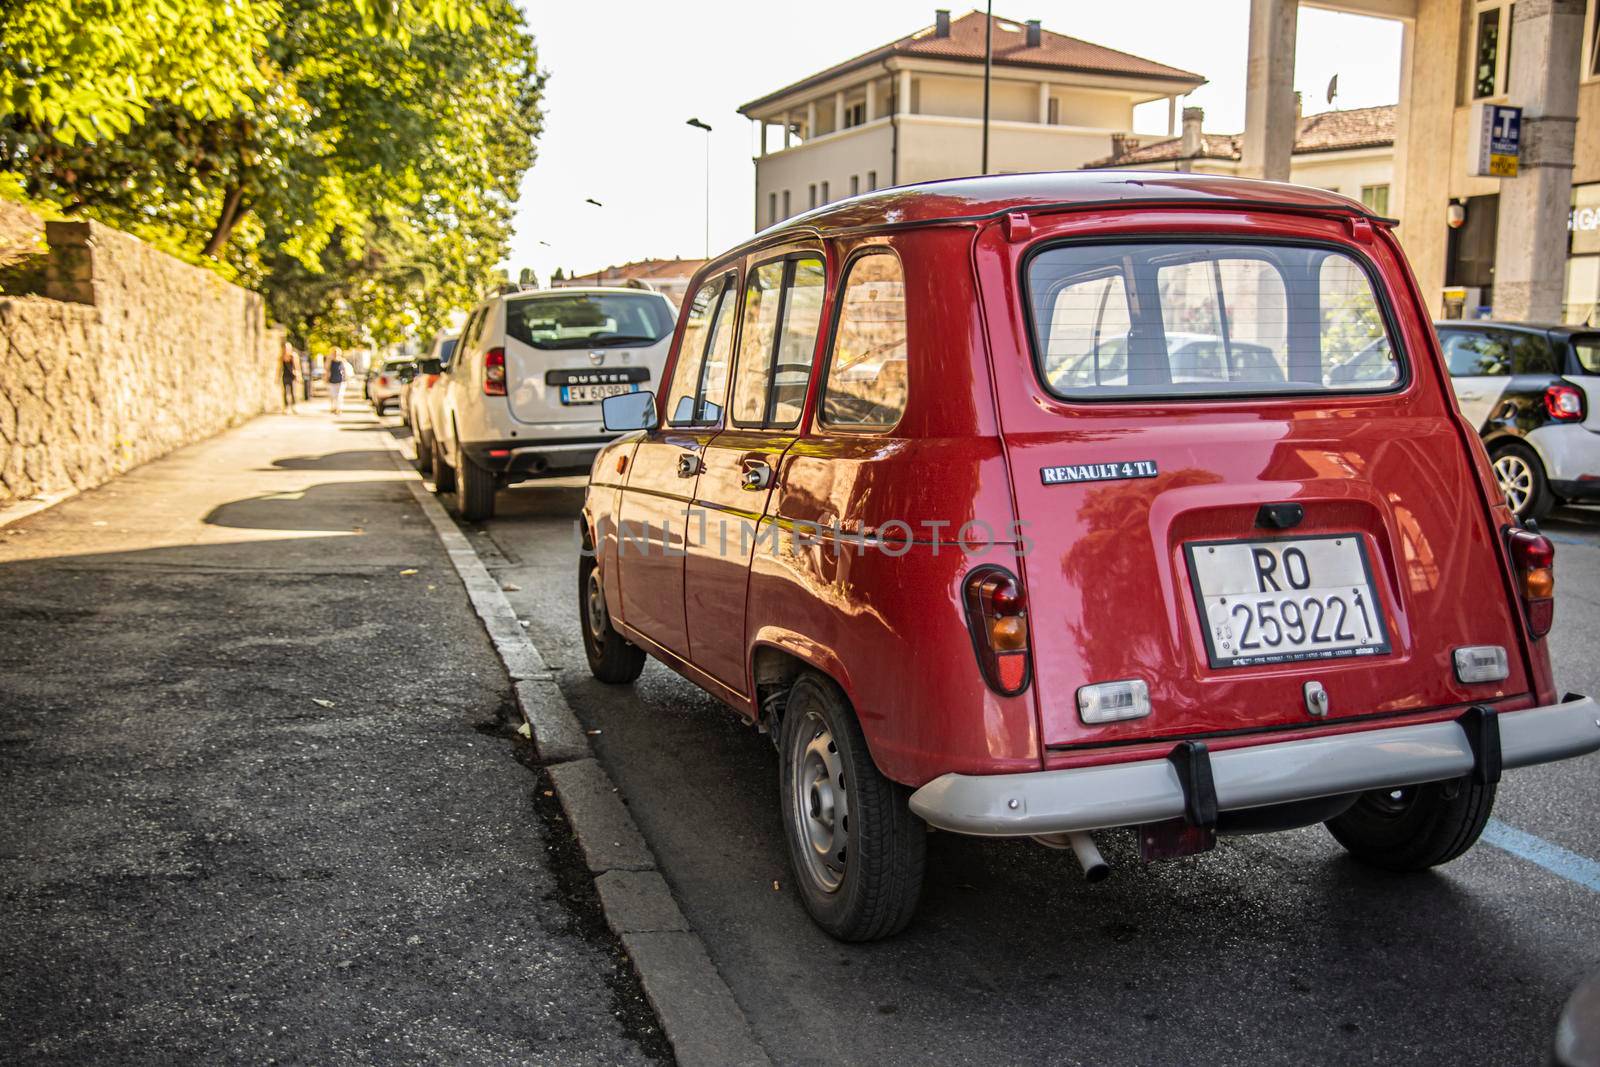 Rovigo, Italy 29 july 2022: Old car Renault 4 parked near a street